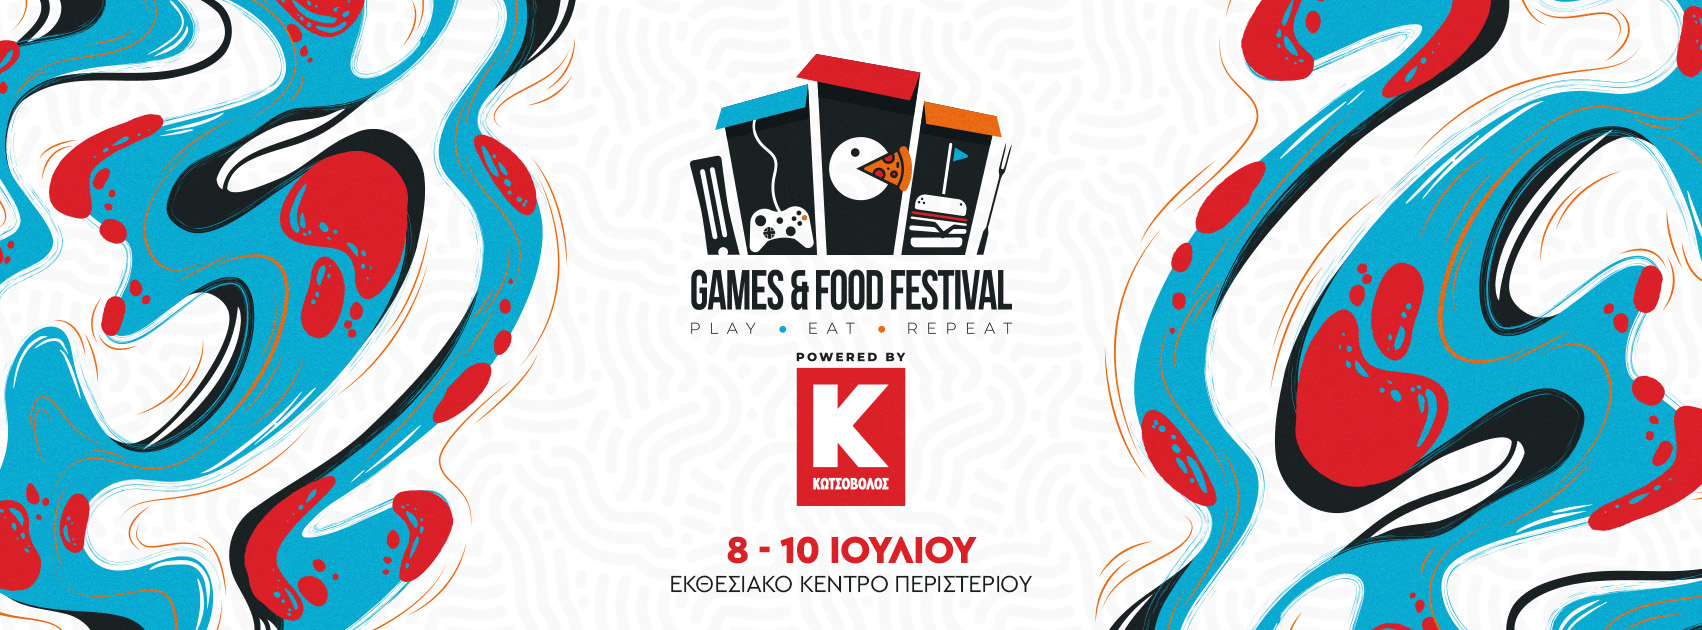 Games & Food Festival